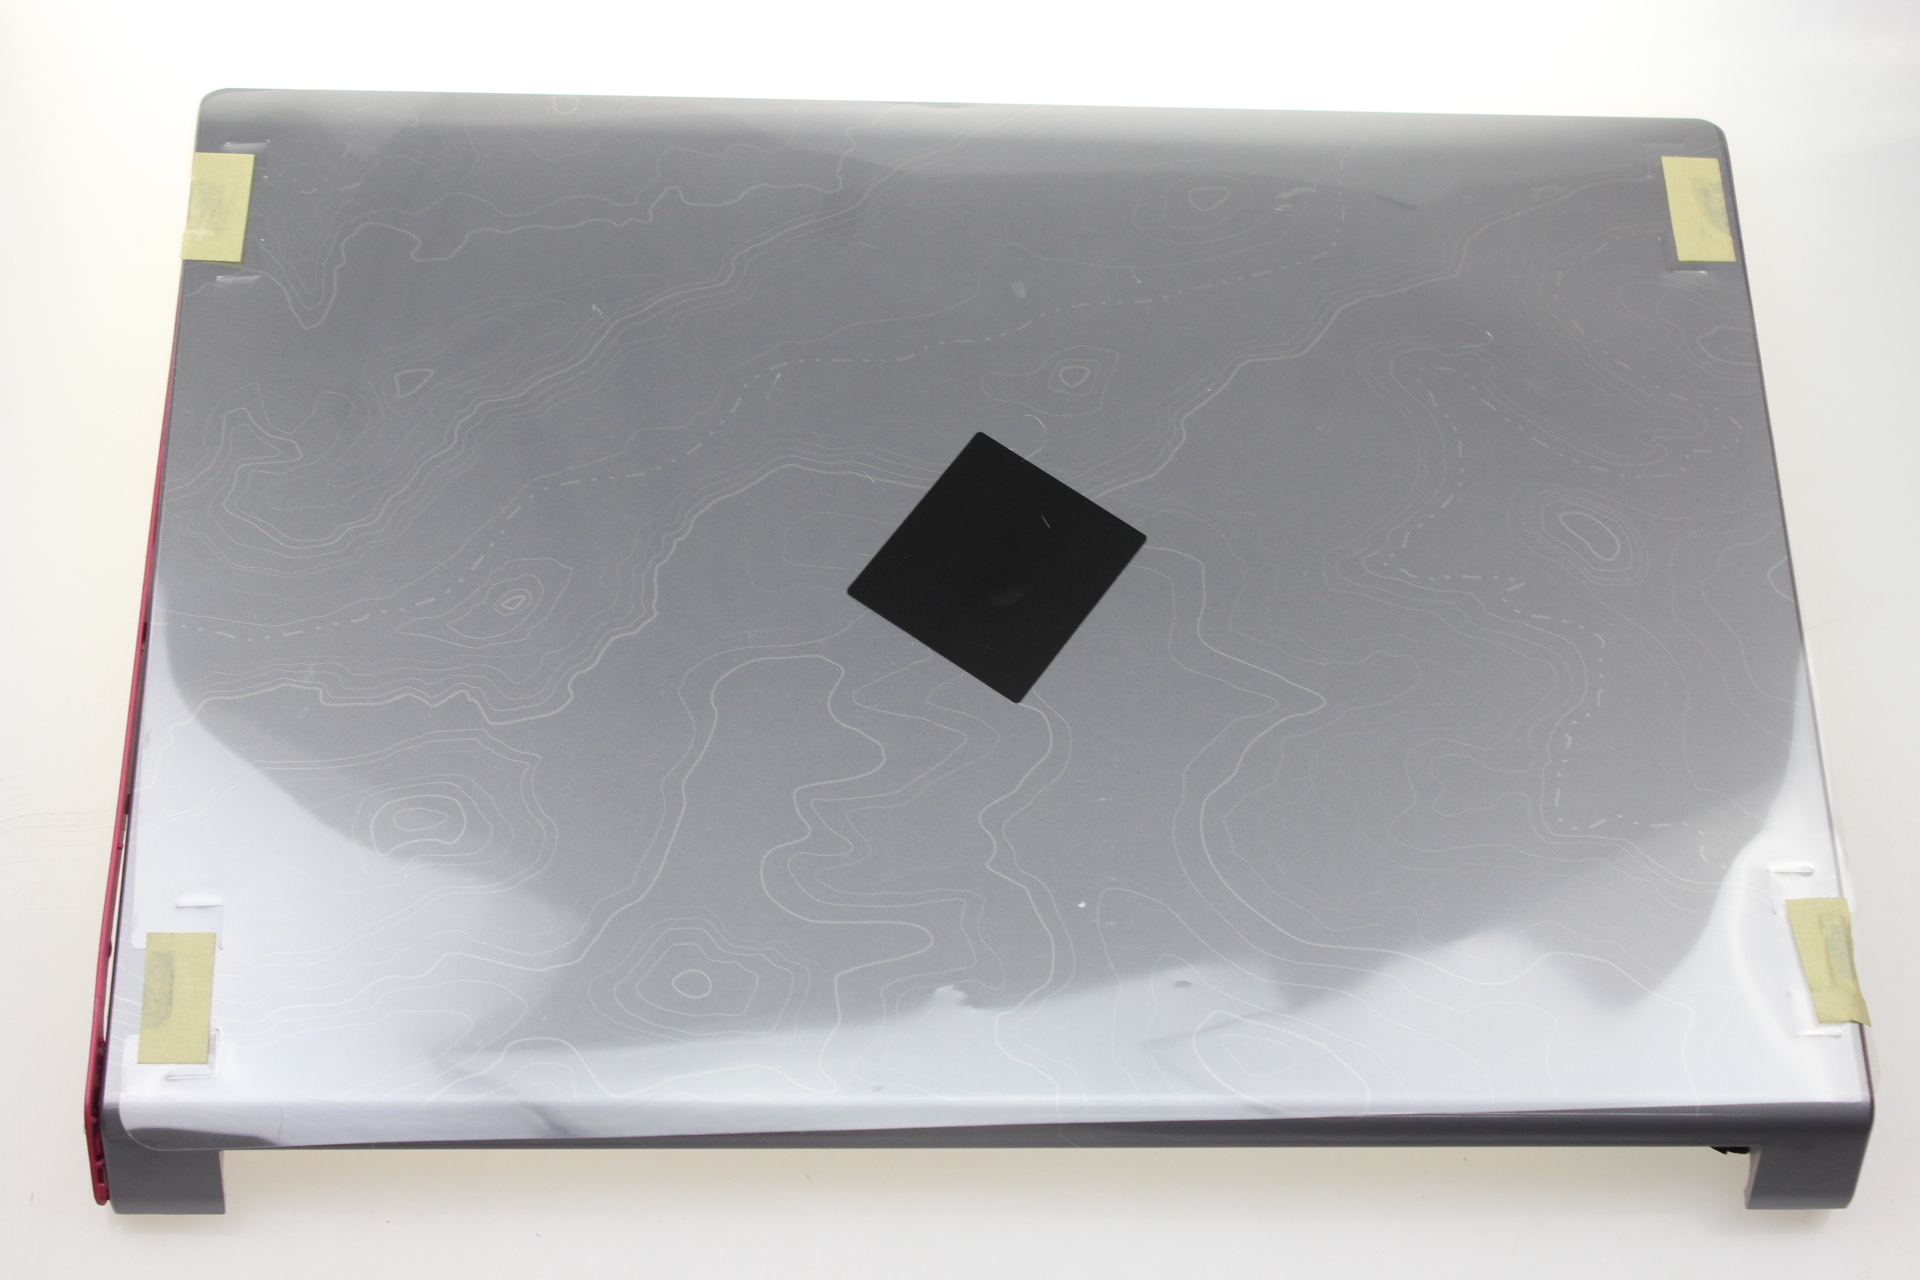 Yeni Laptop LCD Arka Kapak Dell 1735 Siyah Bir Kapak